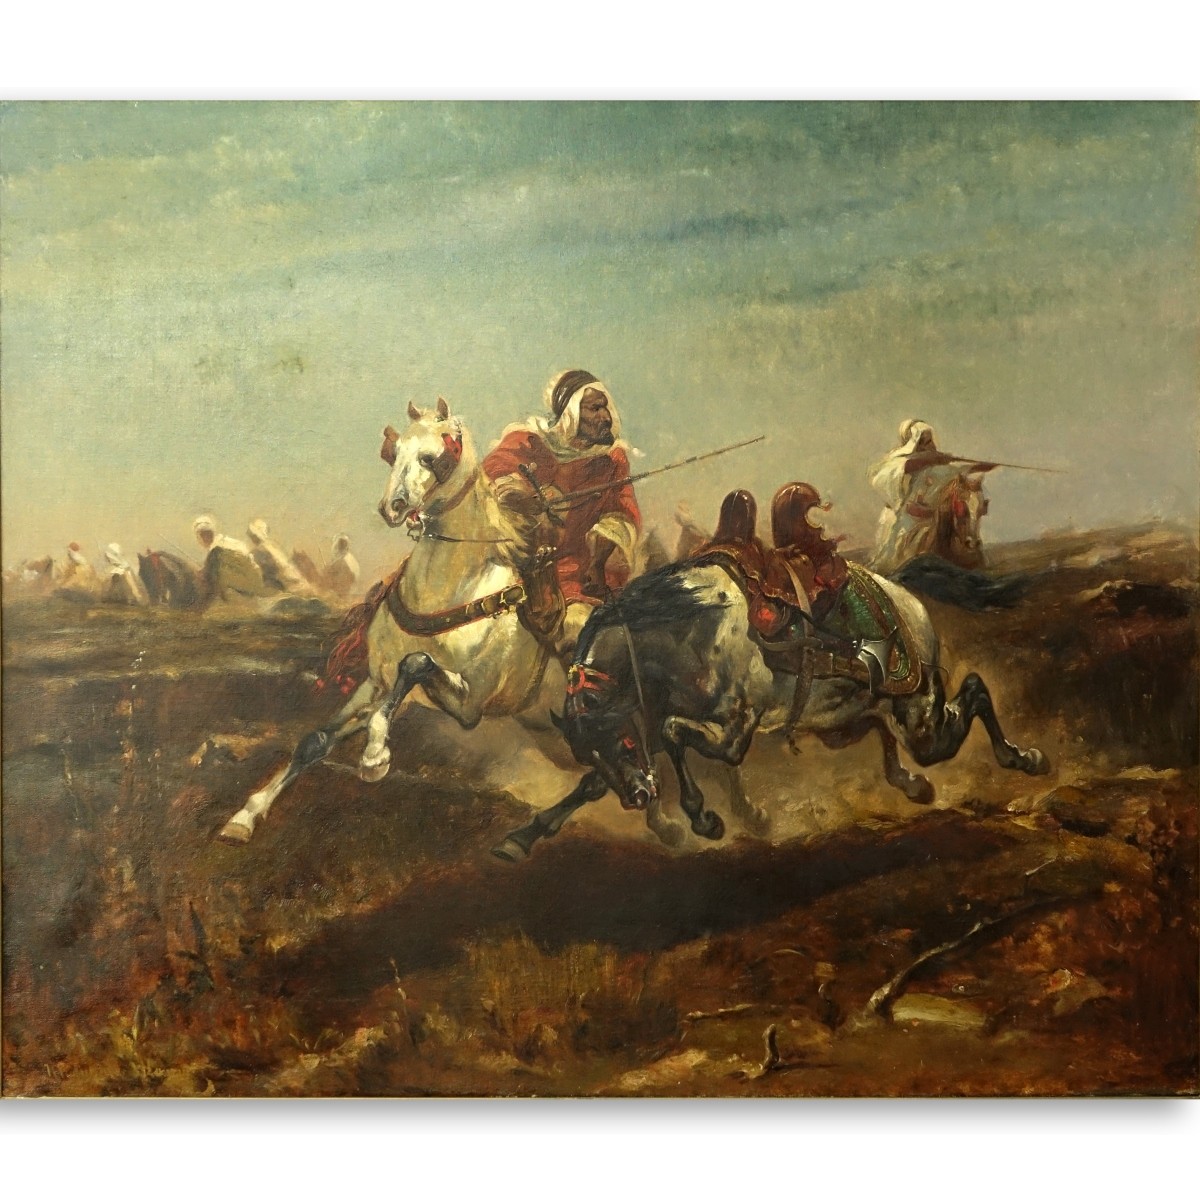 After: Adolf Schreyer Oil/Canvas "Arabian Warriors